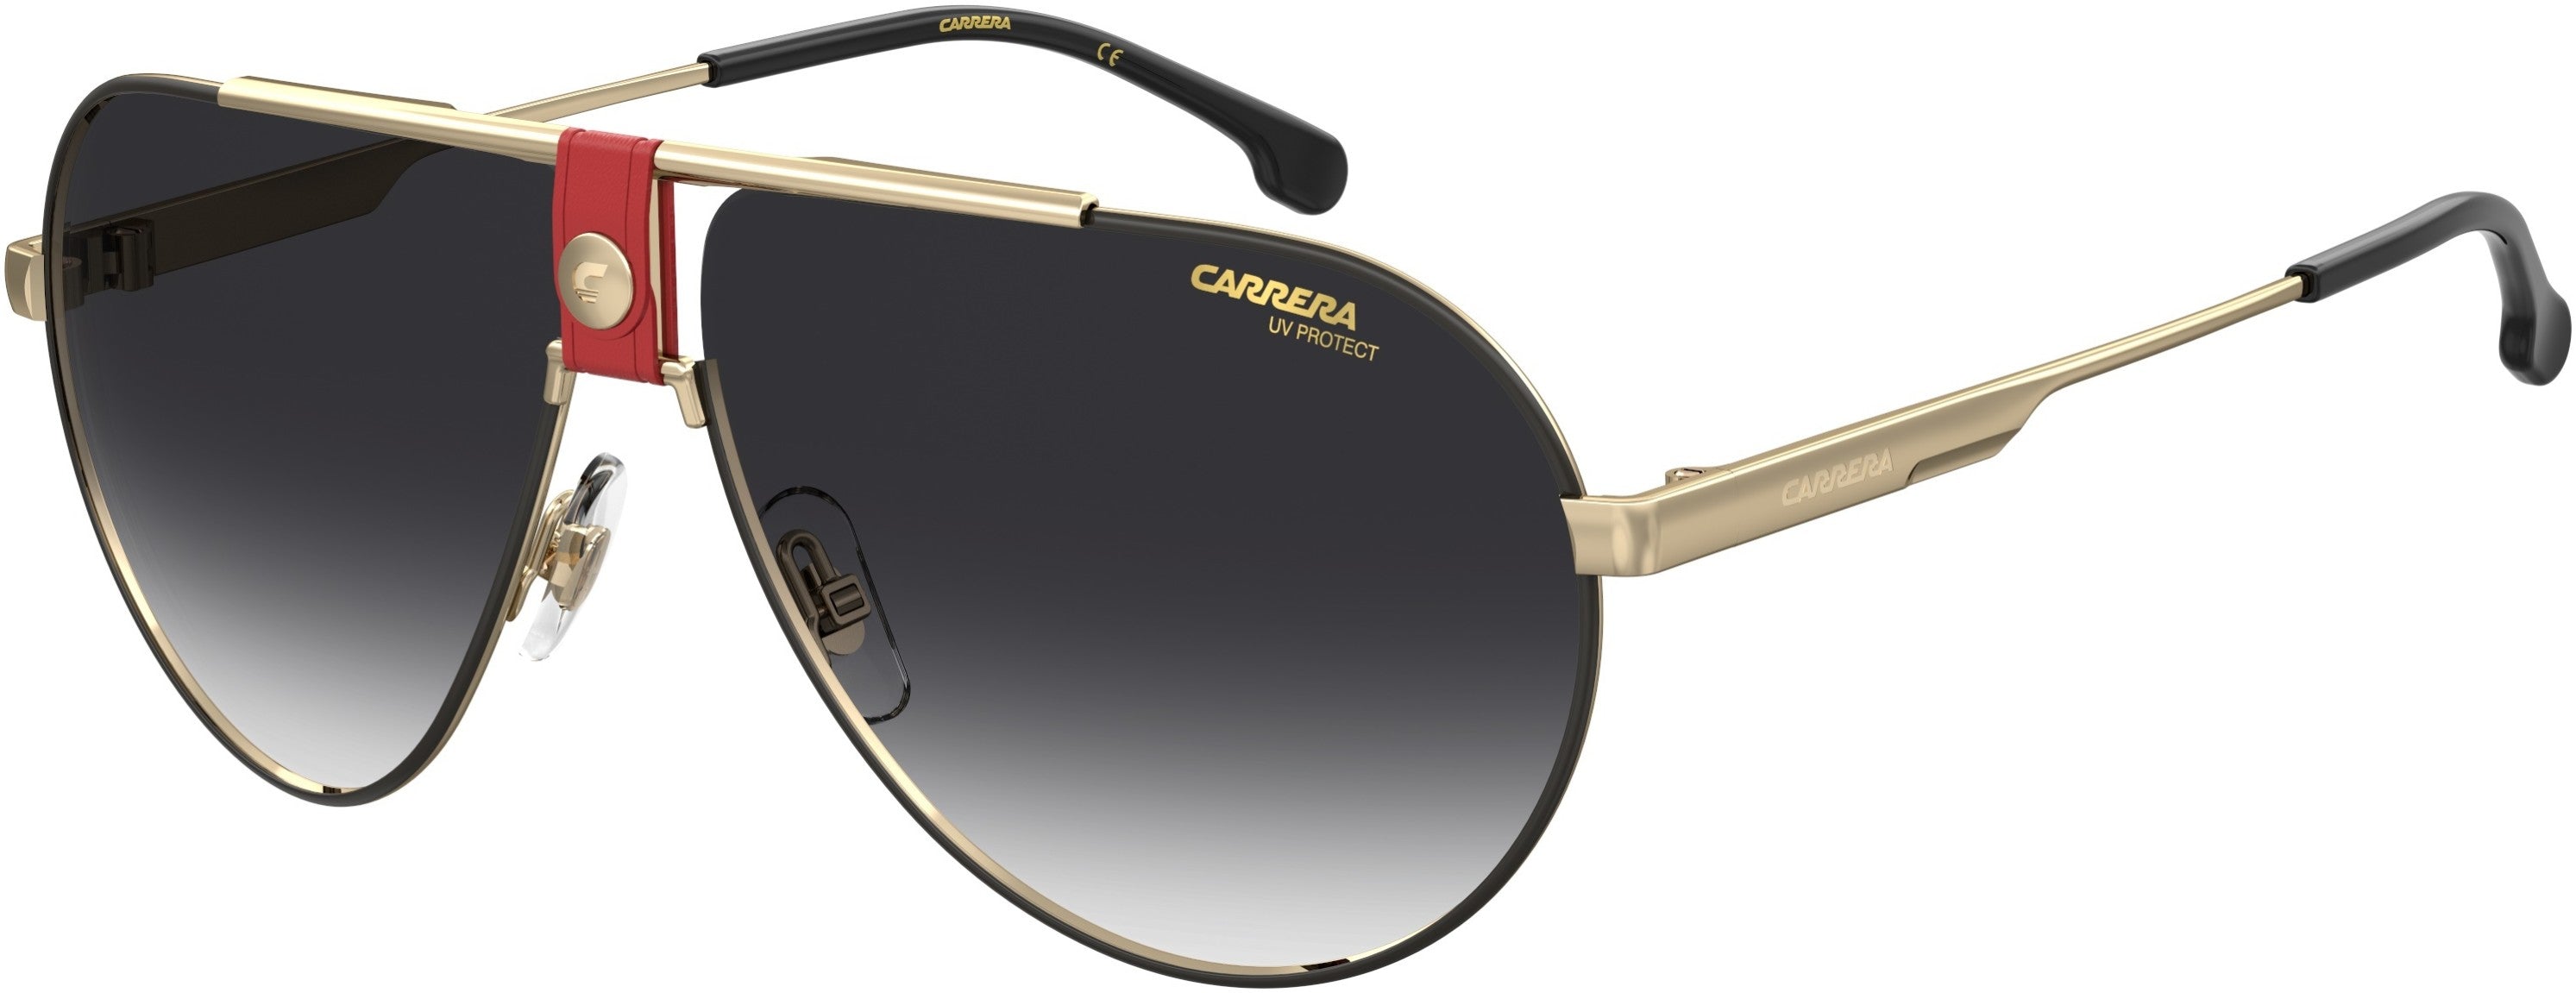  Carrera 1033/S Aviator Sunglasses 0Y11-0Y11  Gold Red (9O Dark Gray Gradient)